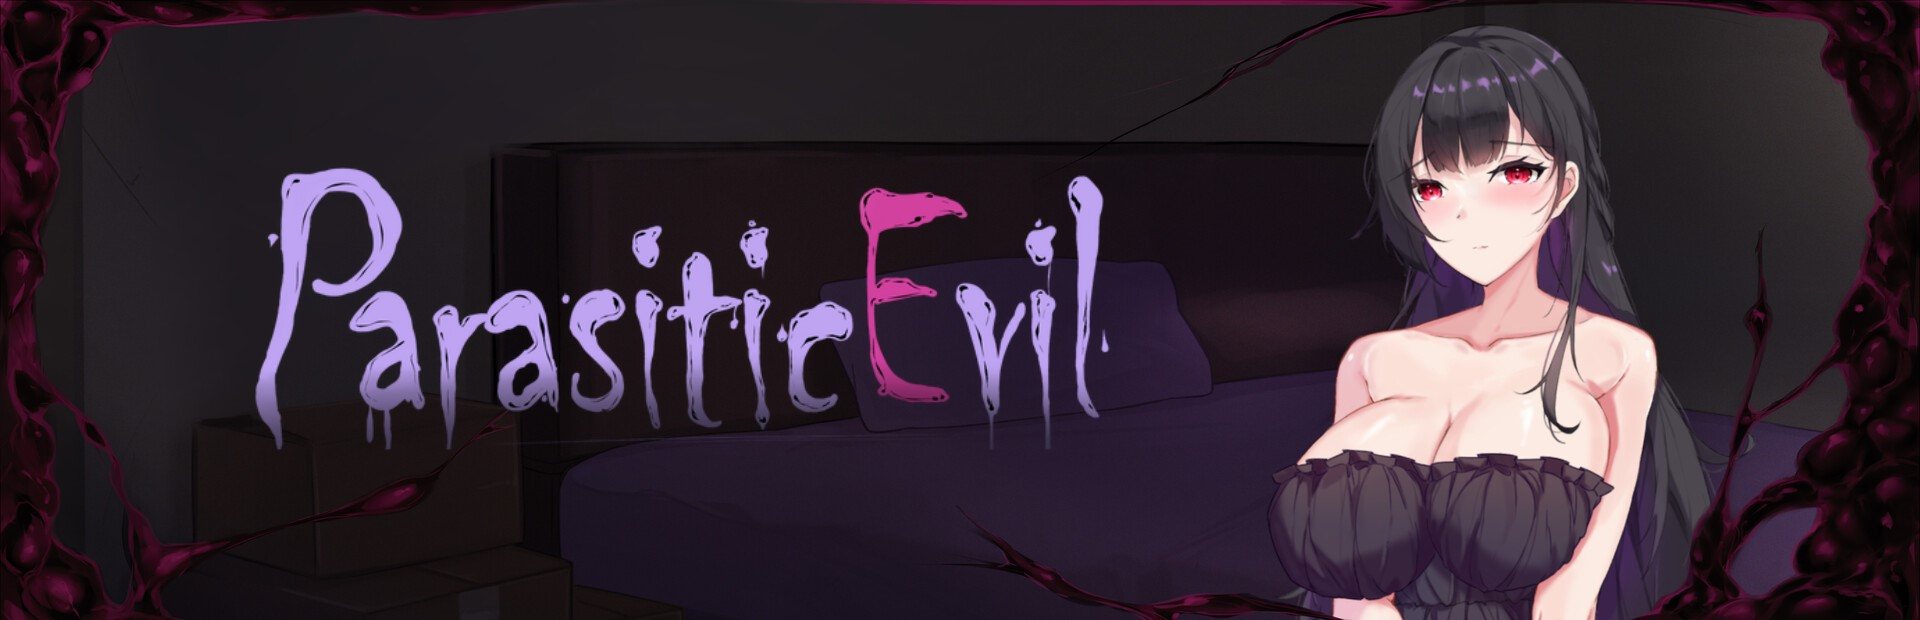 Parasitic Evil [R's] Adult xxx Game Download